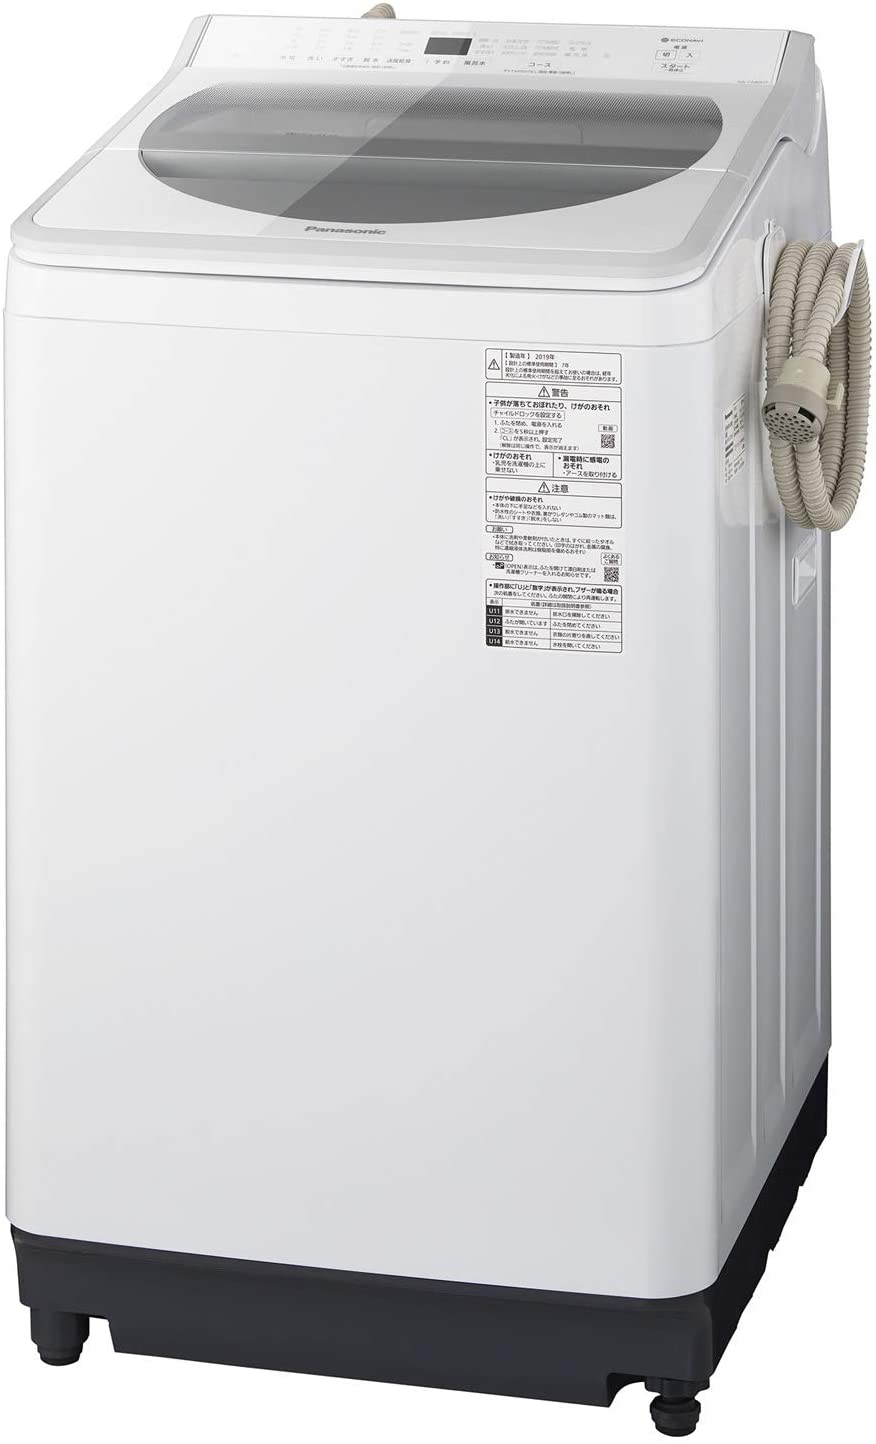 Panasonic(パナソニック) 全自動洗濯機 NA-FA80H7の商品画像サムネ1 